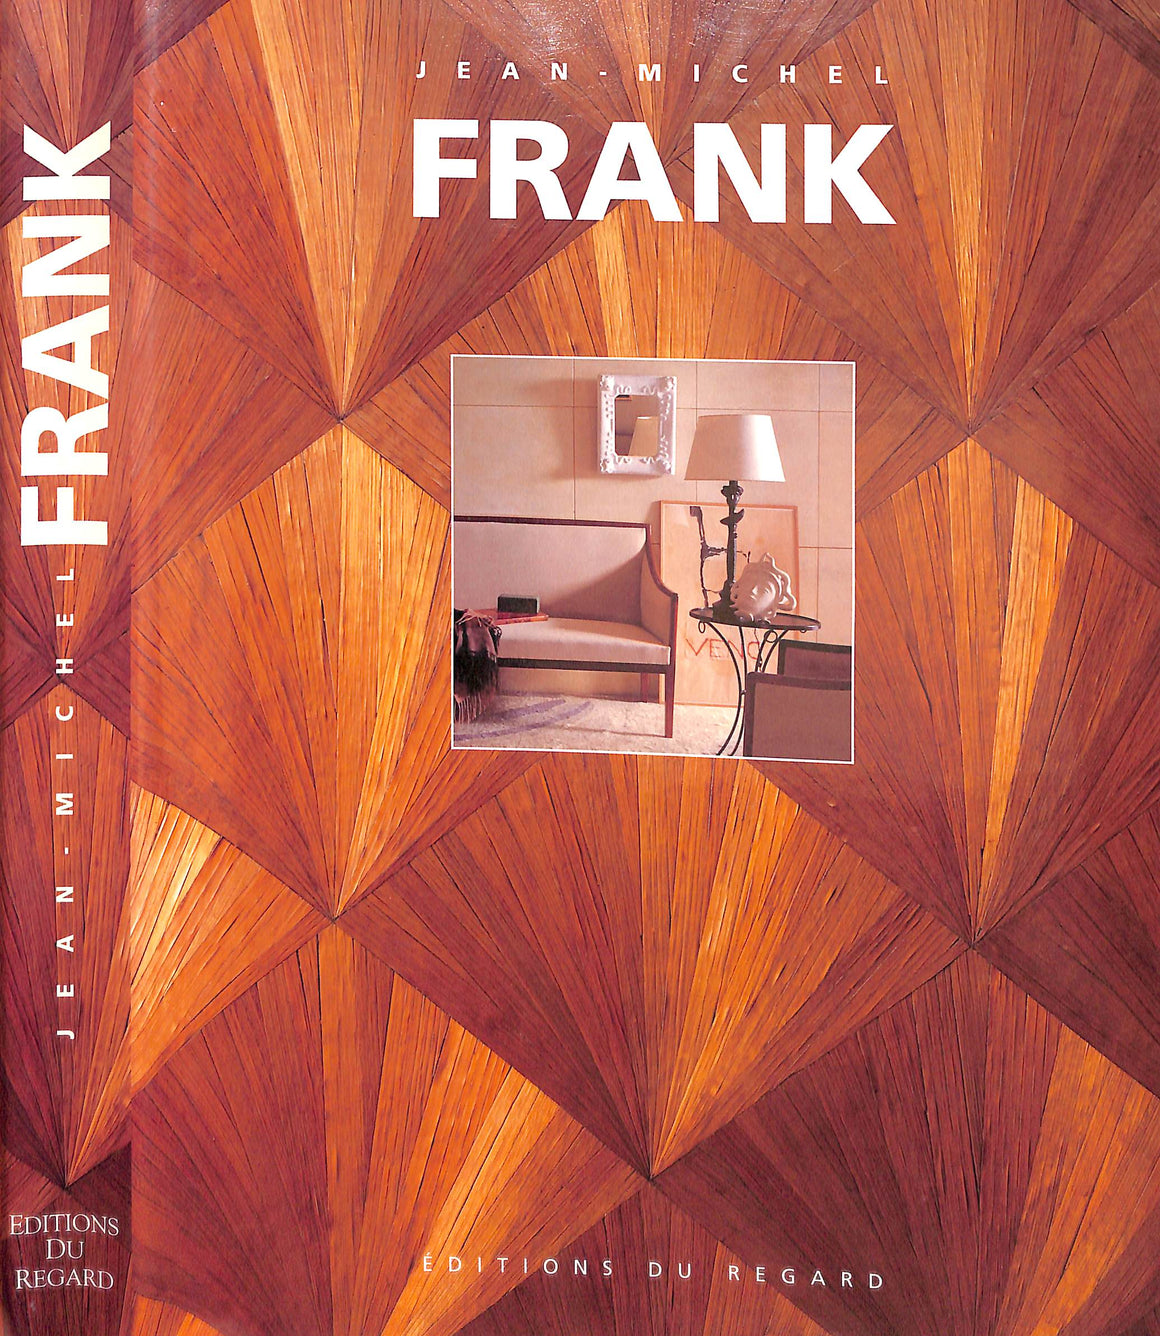 "Jean-Michel Frank" 1997 CHANAUX, Adolphe